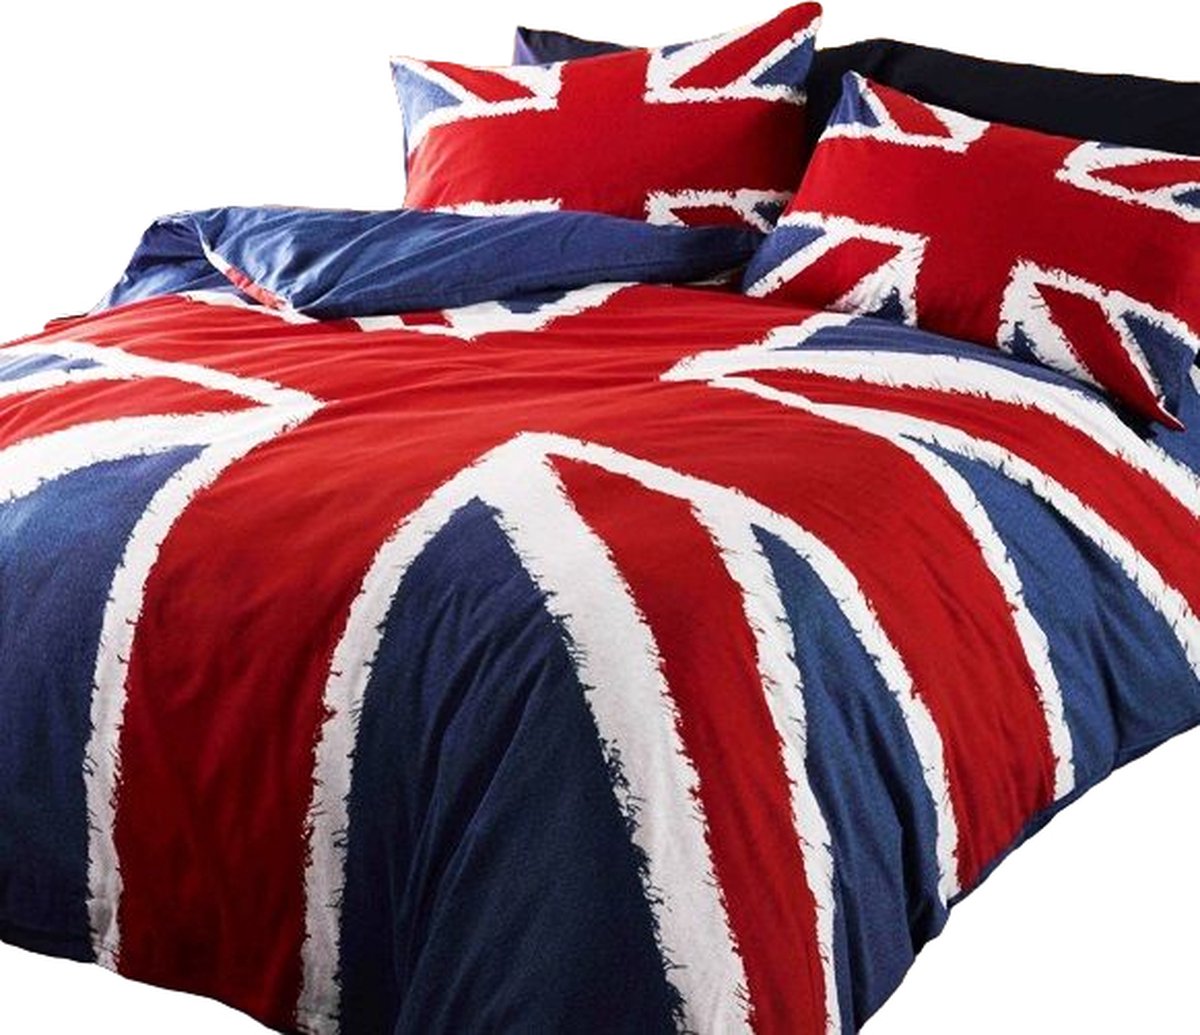 Union Jack tweepersoons dekbedovertrek - 200 x 200 cm. - Engelse Vlag dekbed